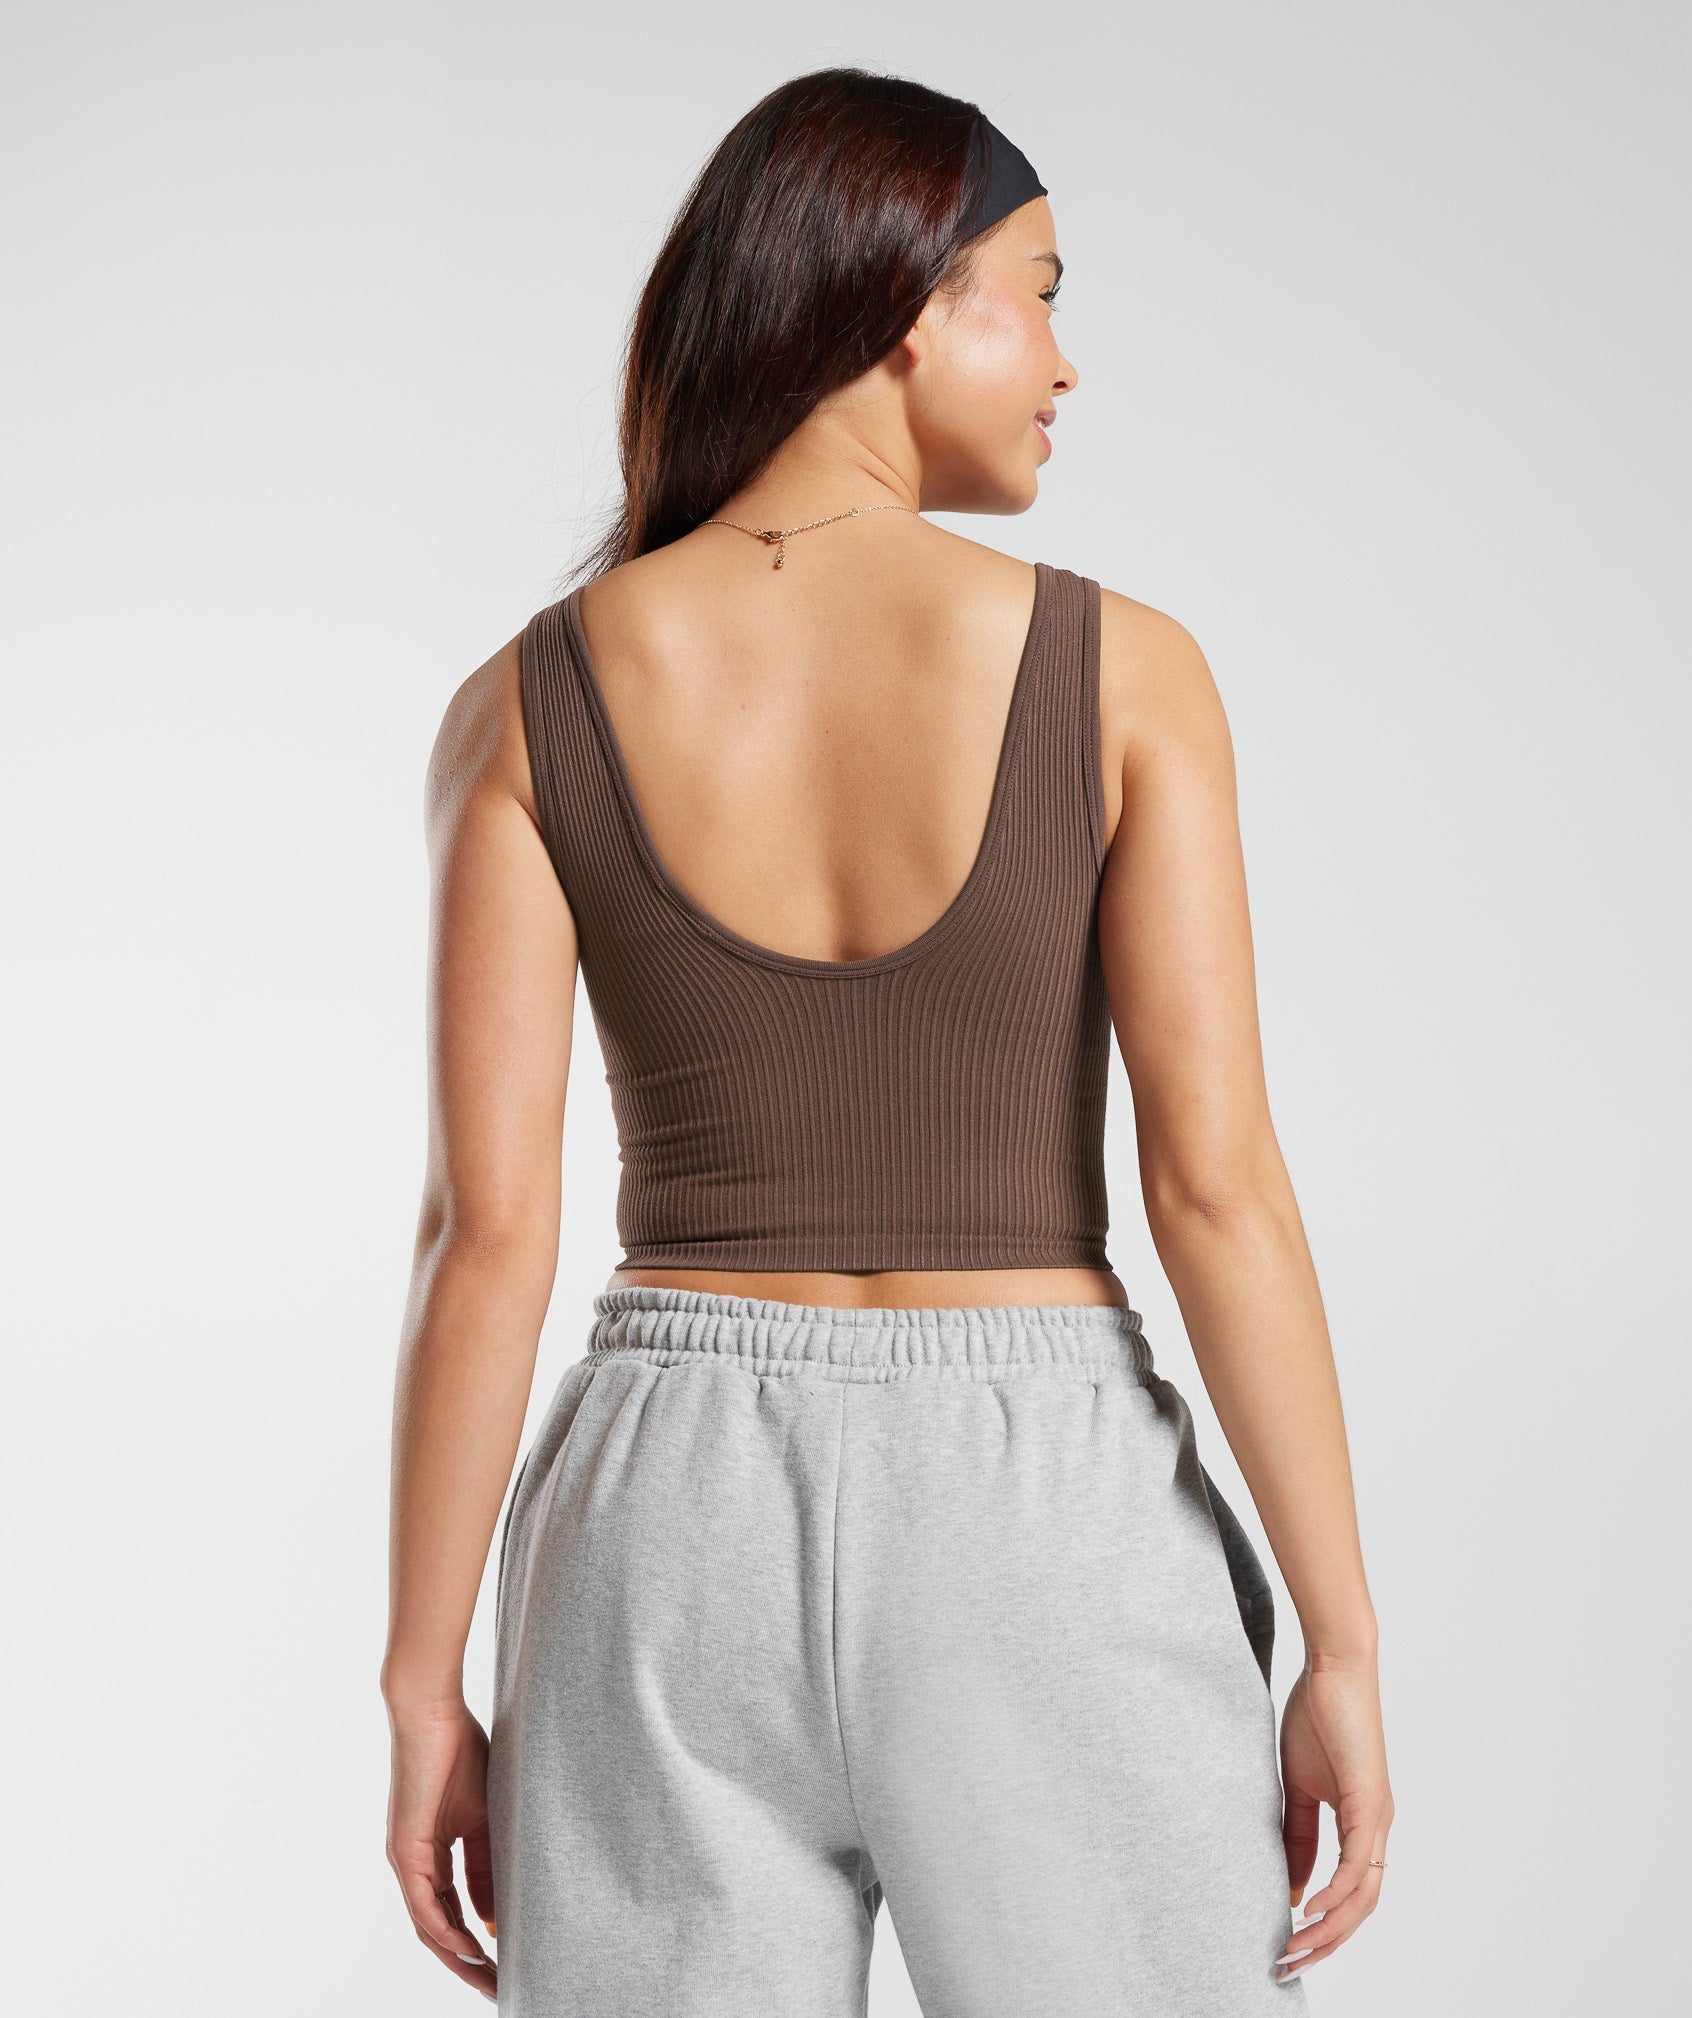 Sunzel Ribbed Tank Tops for Women, Halter High Neck Seamless Cute Crop Top,  Basics Sleeveless Workout Athletic Yoga Shirts